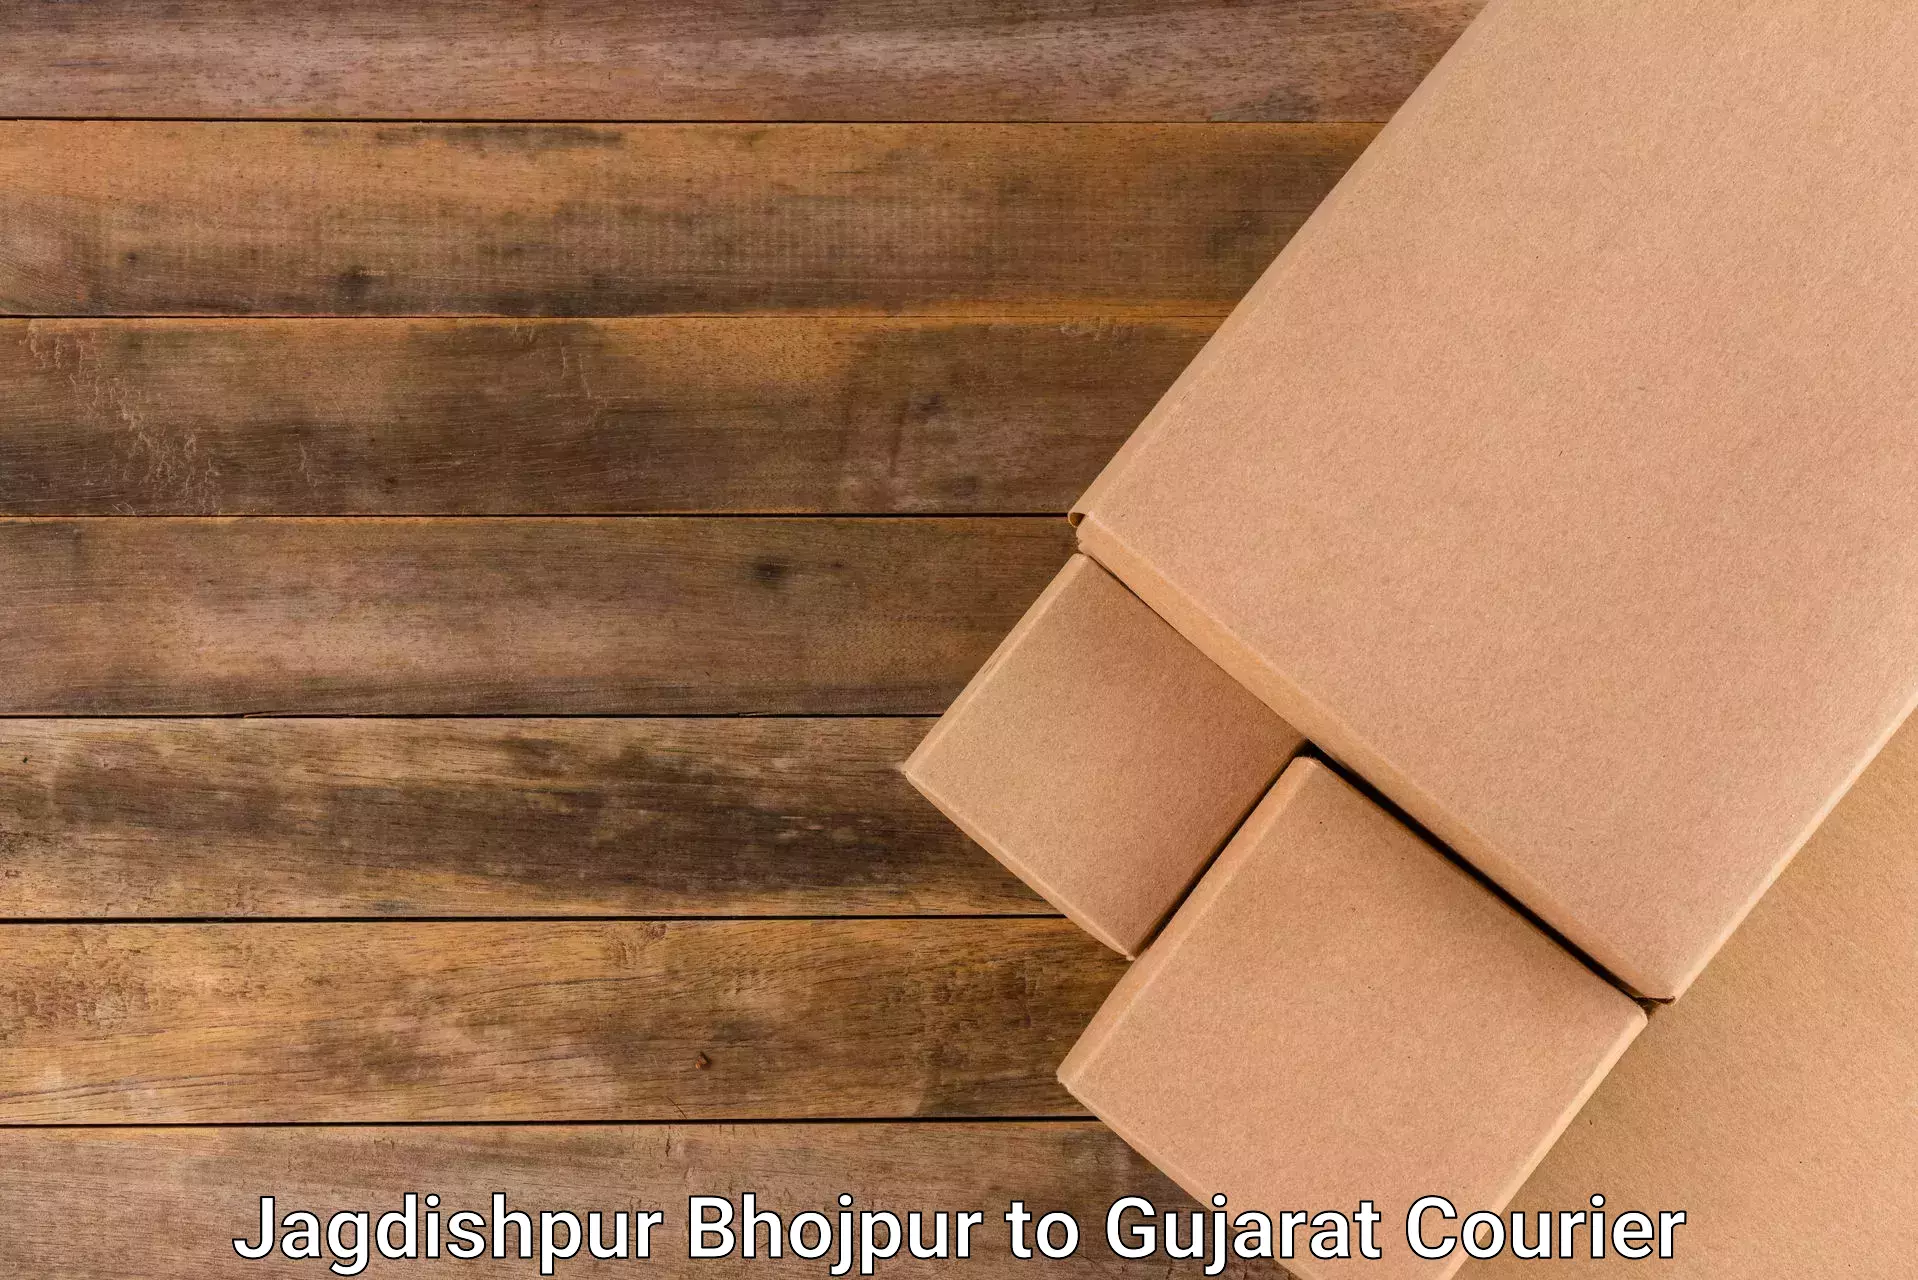 Bulk courier orders Jagdishpur Bhojpur to Lunawada